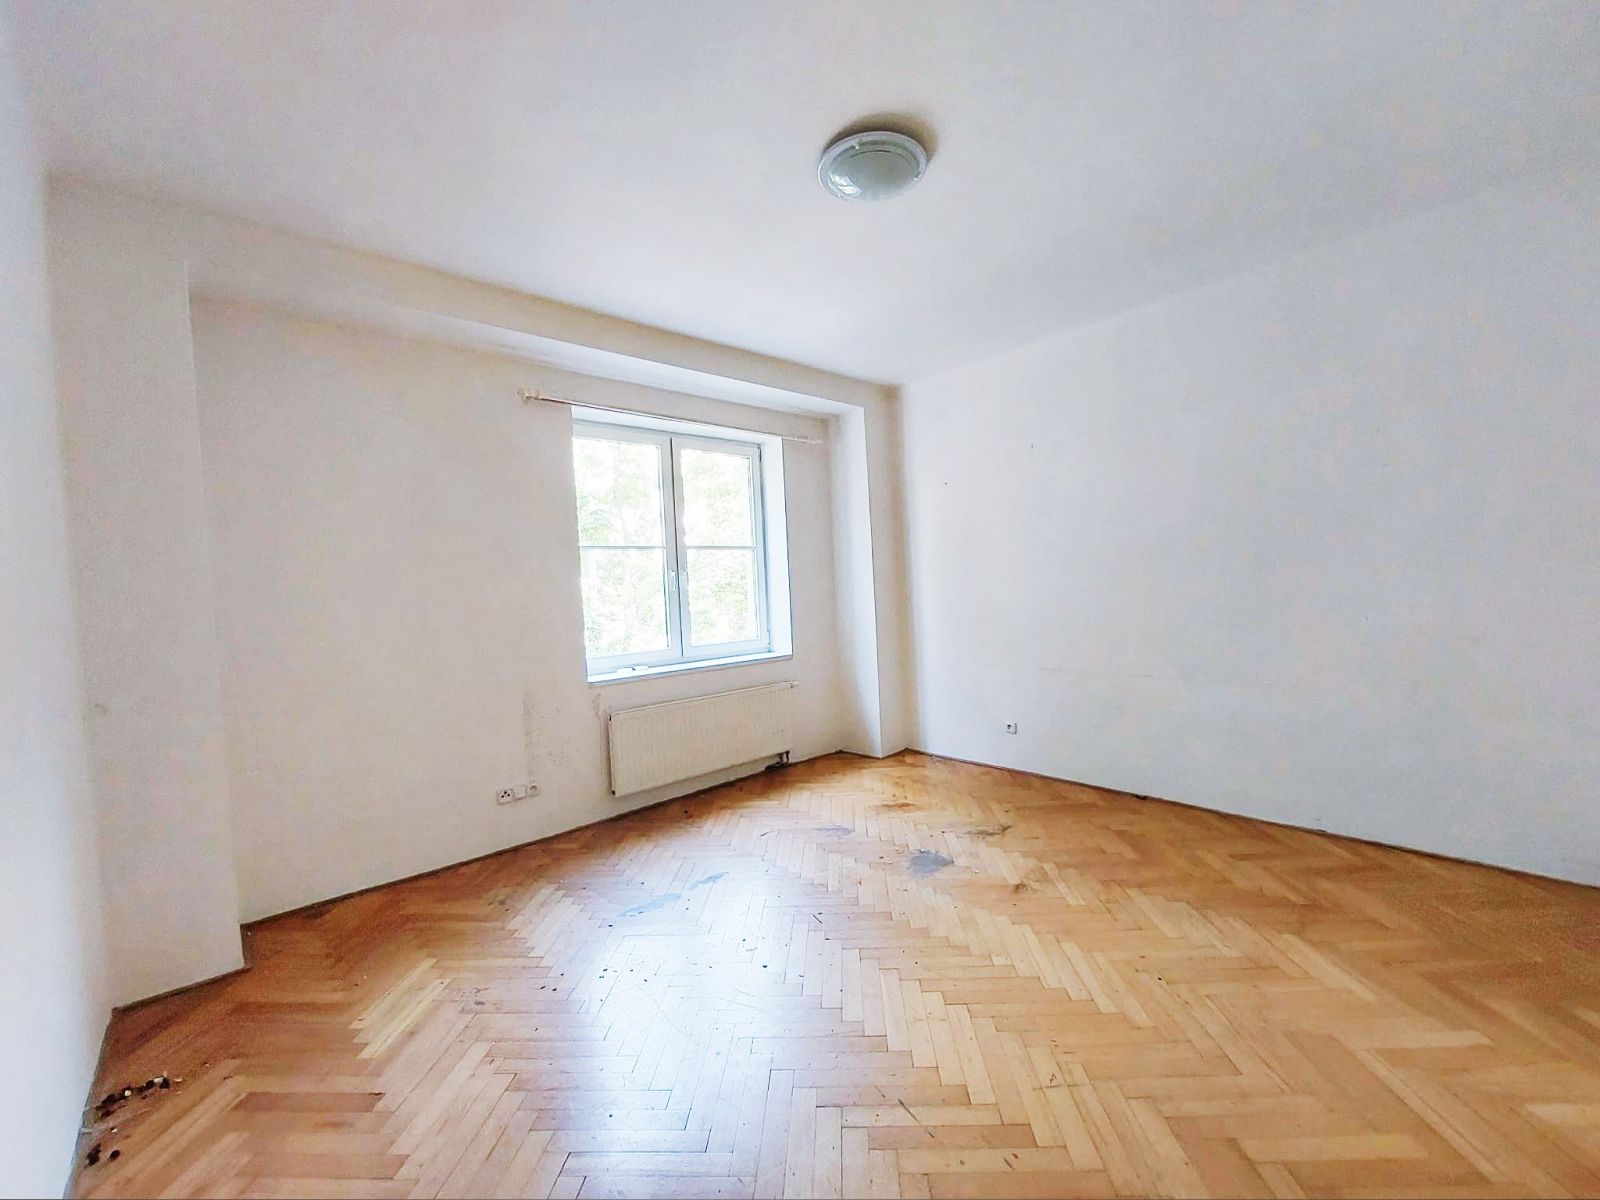 Pronájem bytu 2+1, 46m2, Praha 3 - Žižkov, ul. Strážní., obrázek č. 1